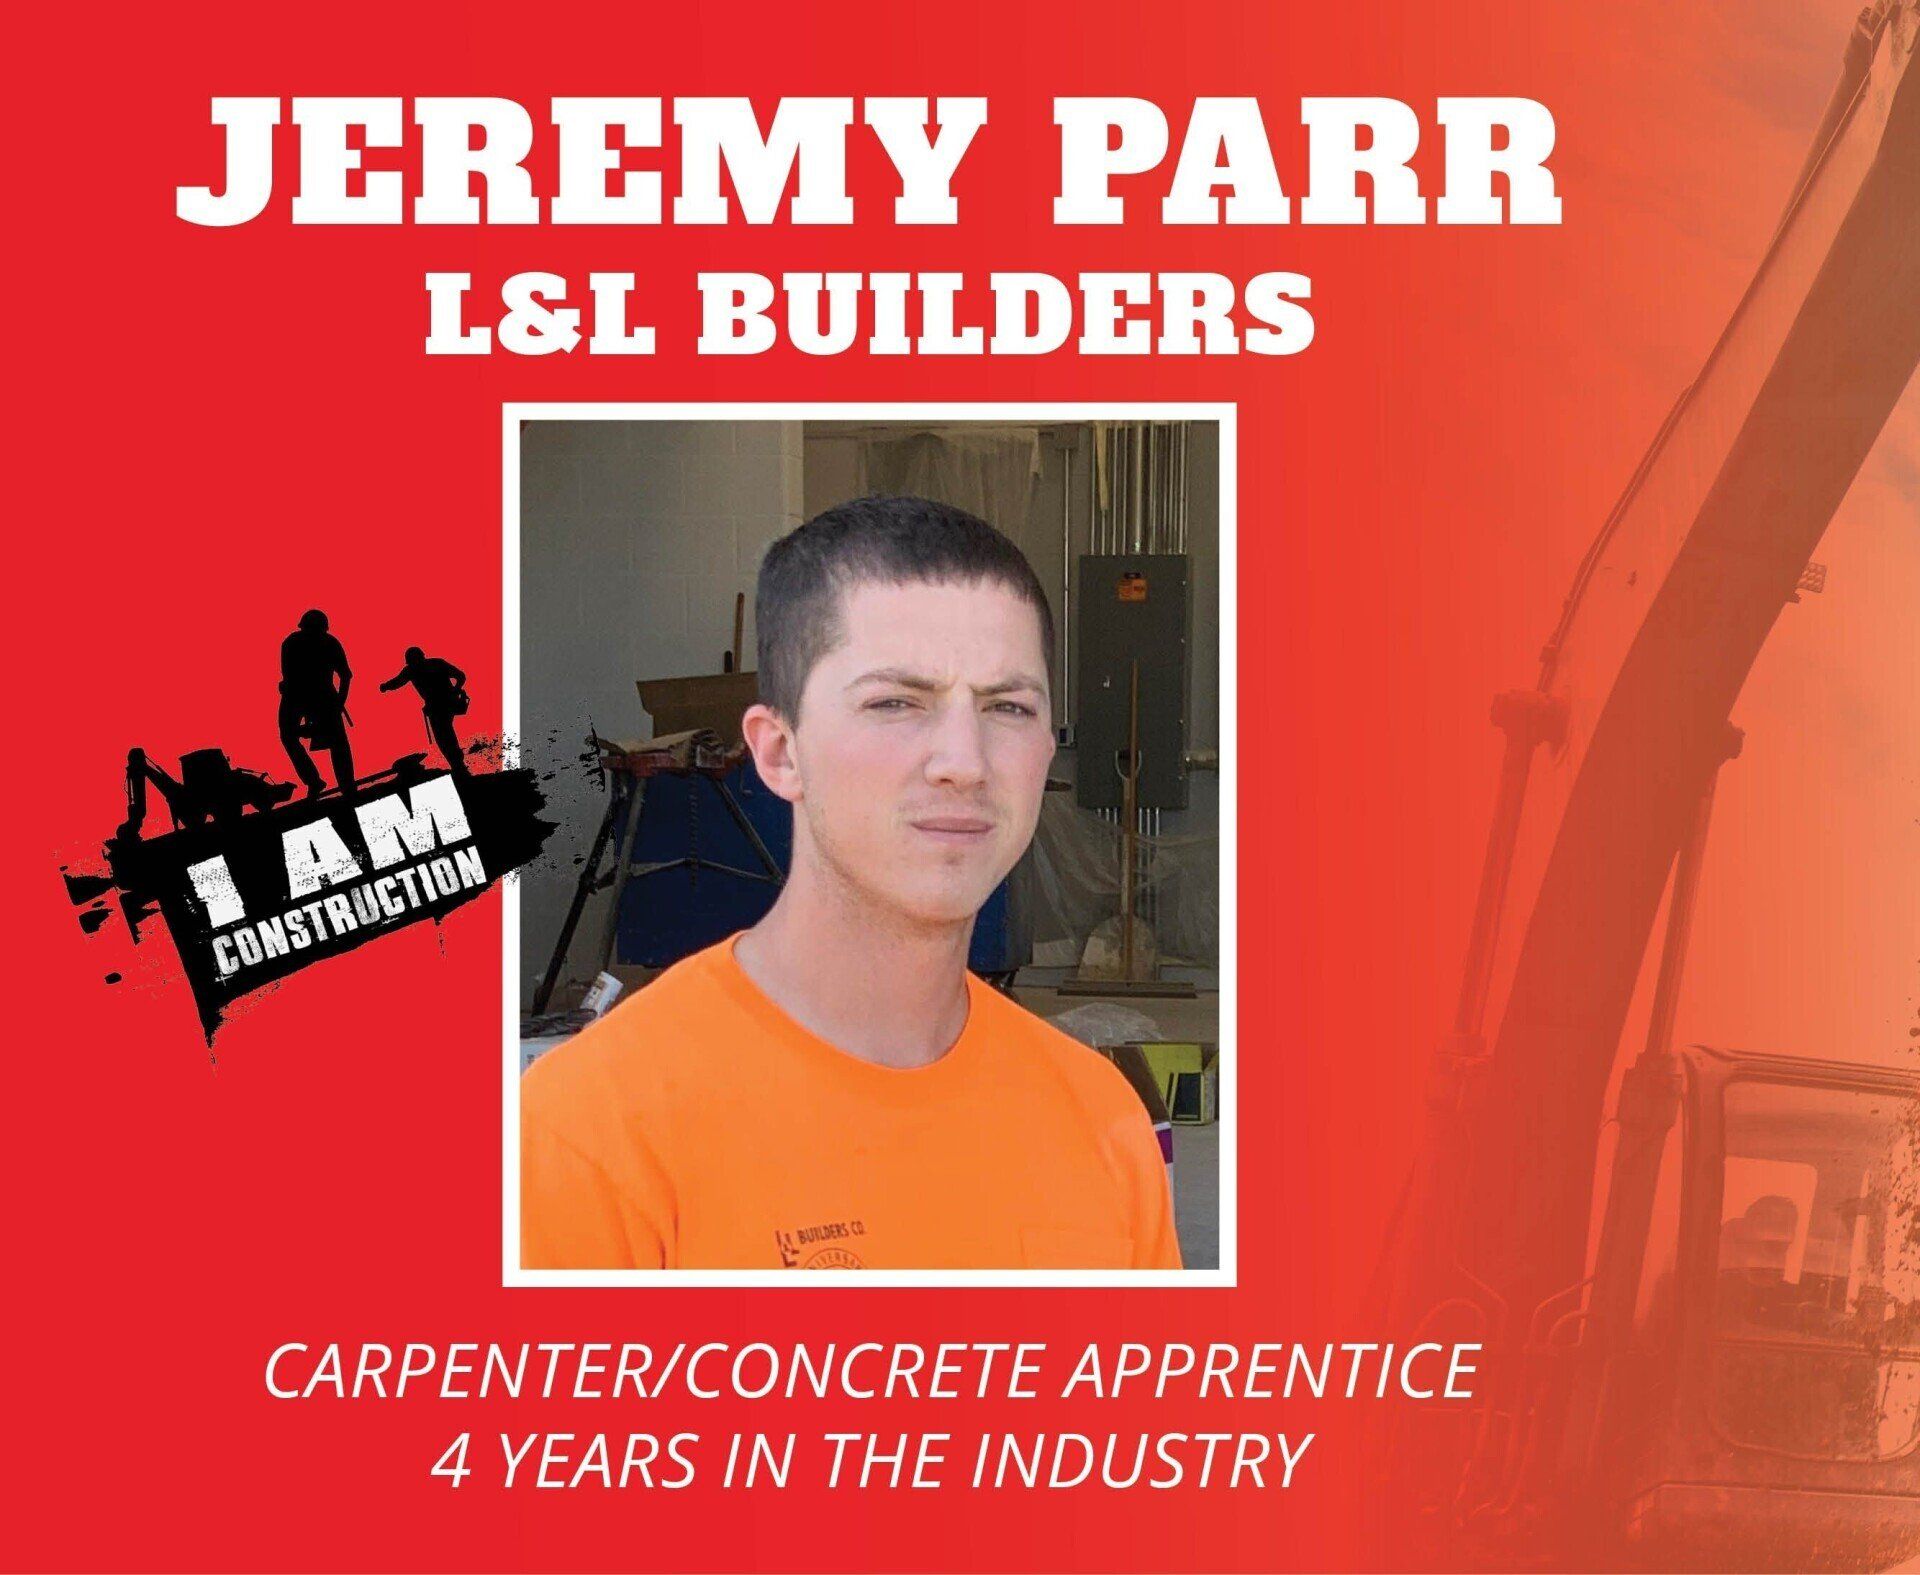 Carpenter Concrete Apprentice — Sioux City, IA — L&L Builders Co.Field Staff Award — Sioux City, IA — L&L Builders Co.